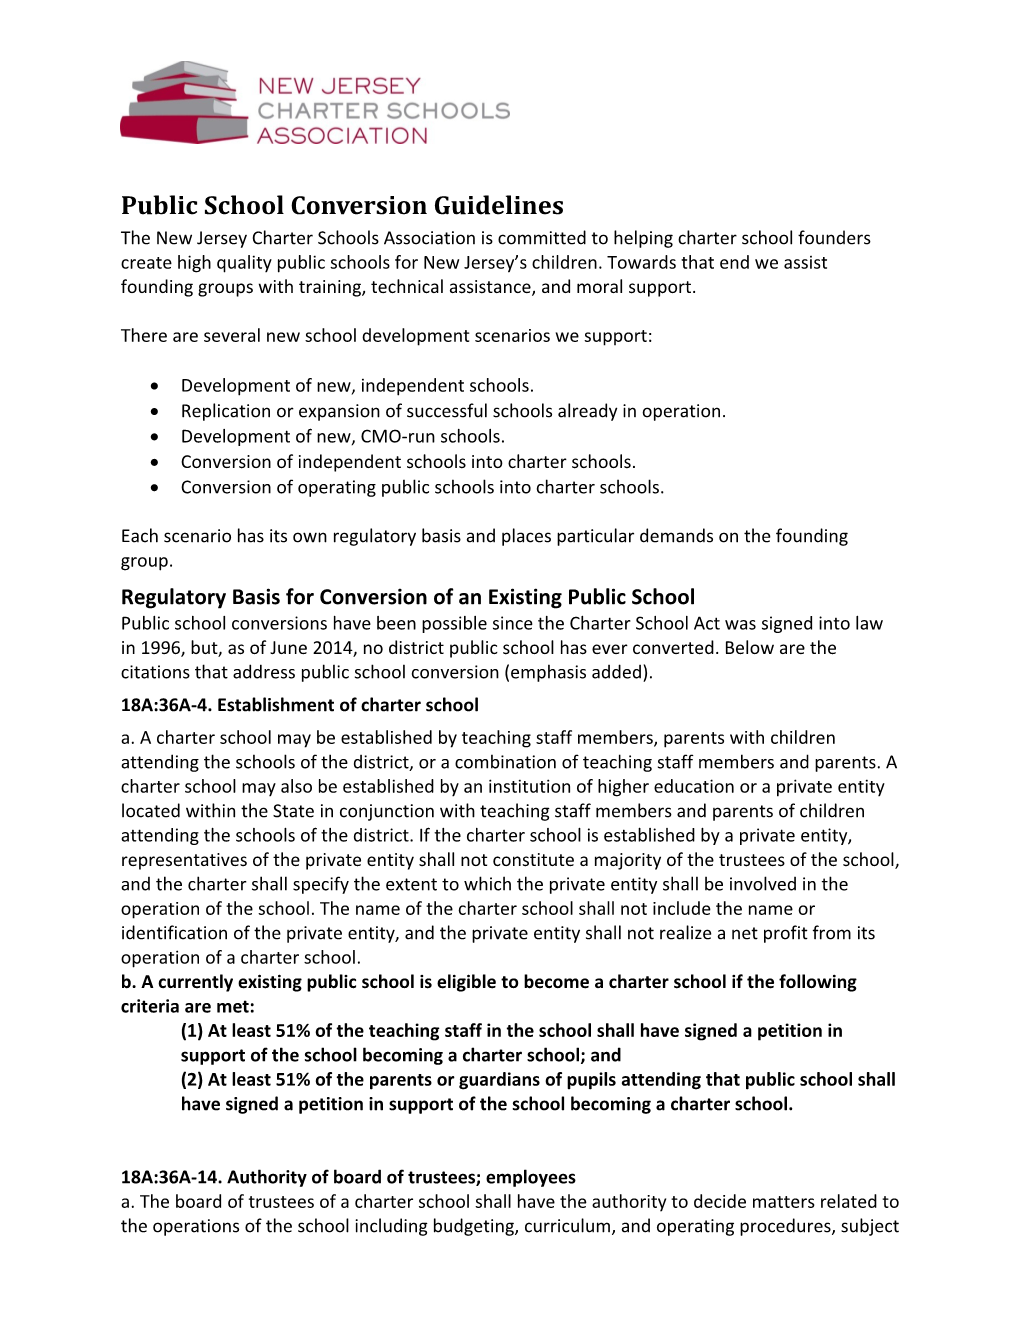 NJCSA Public School Conversion Guidelines